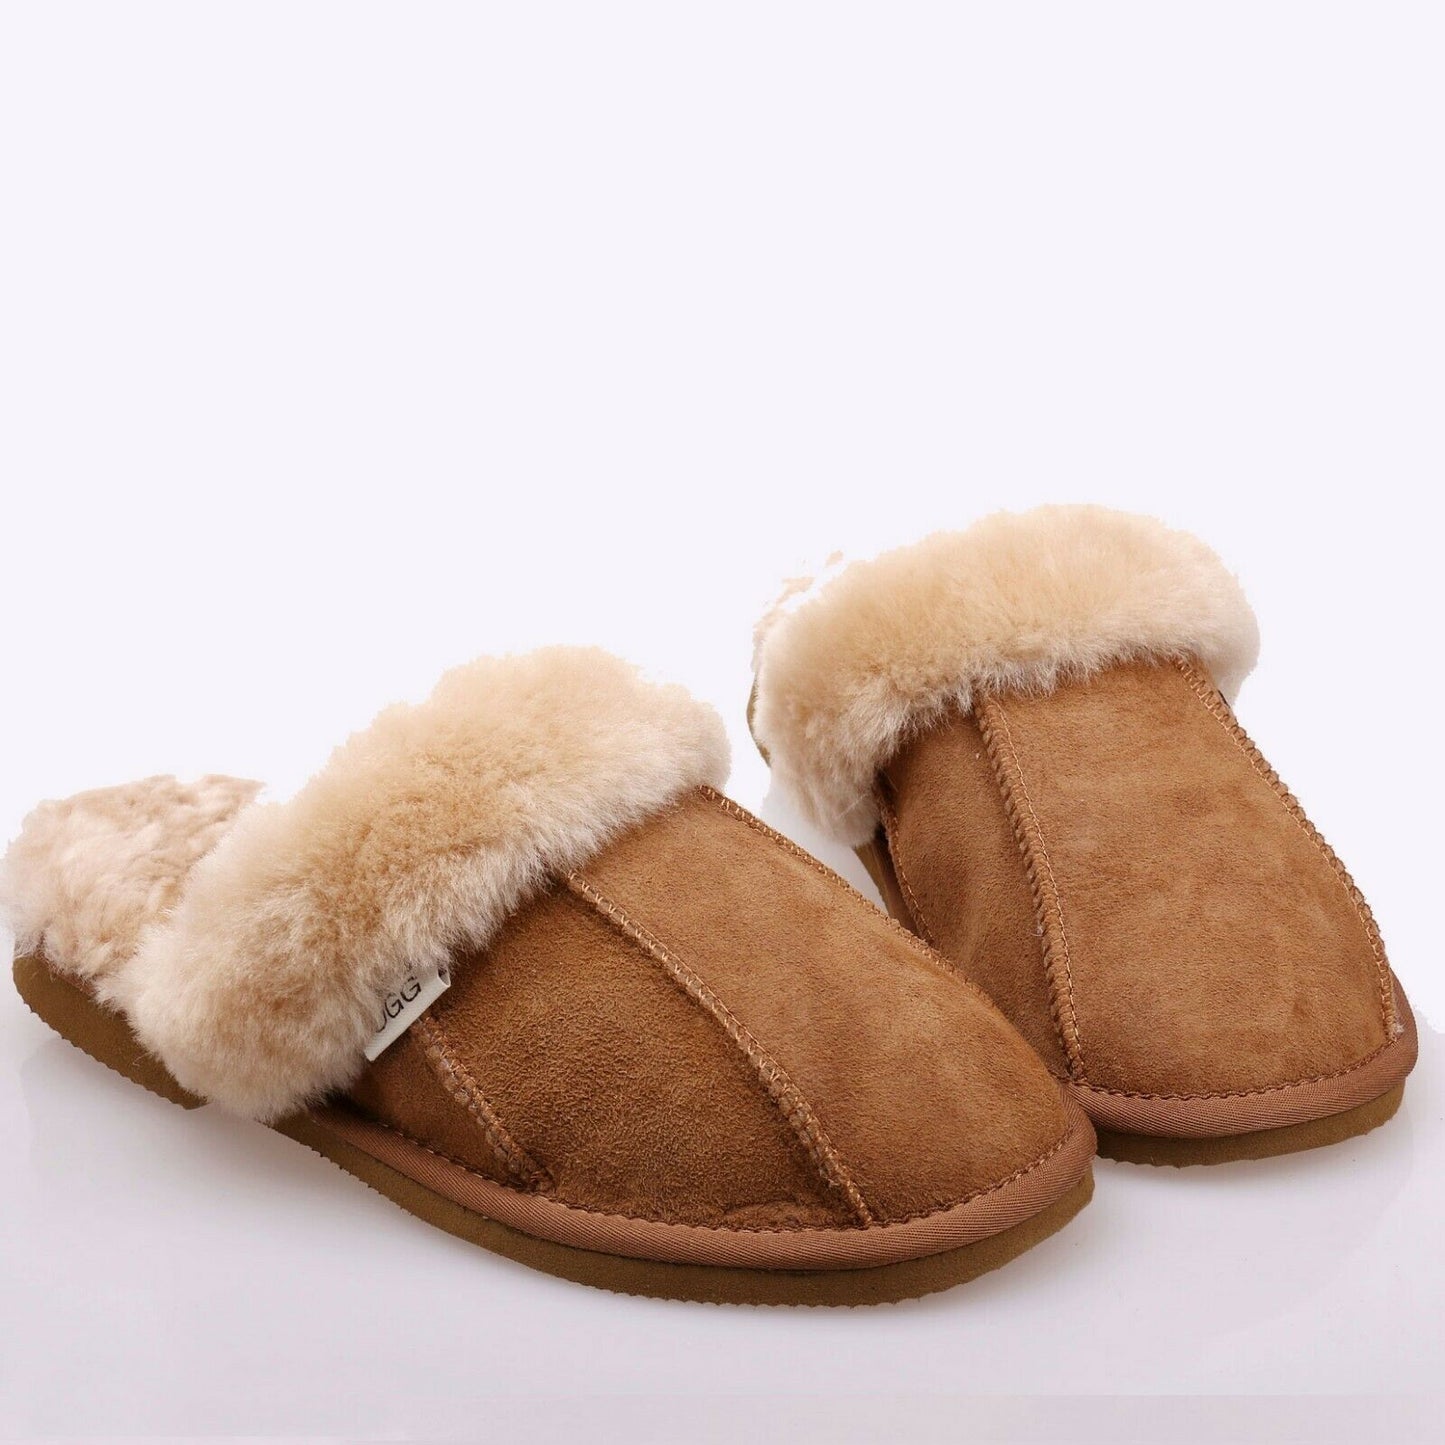 Kangroo® UGG D066 Chestnut Classic Sheepskin Slippers Unisex Scuffs Comfort Indoor Winter Shoes